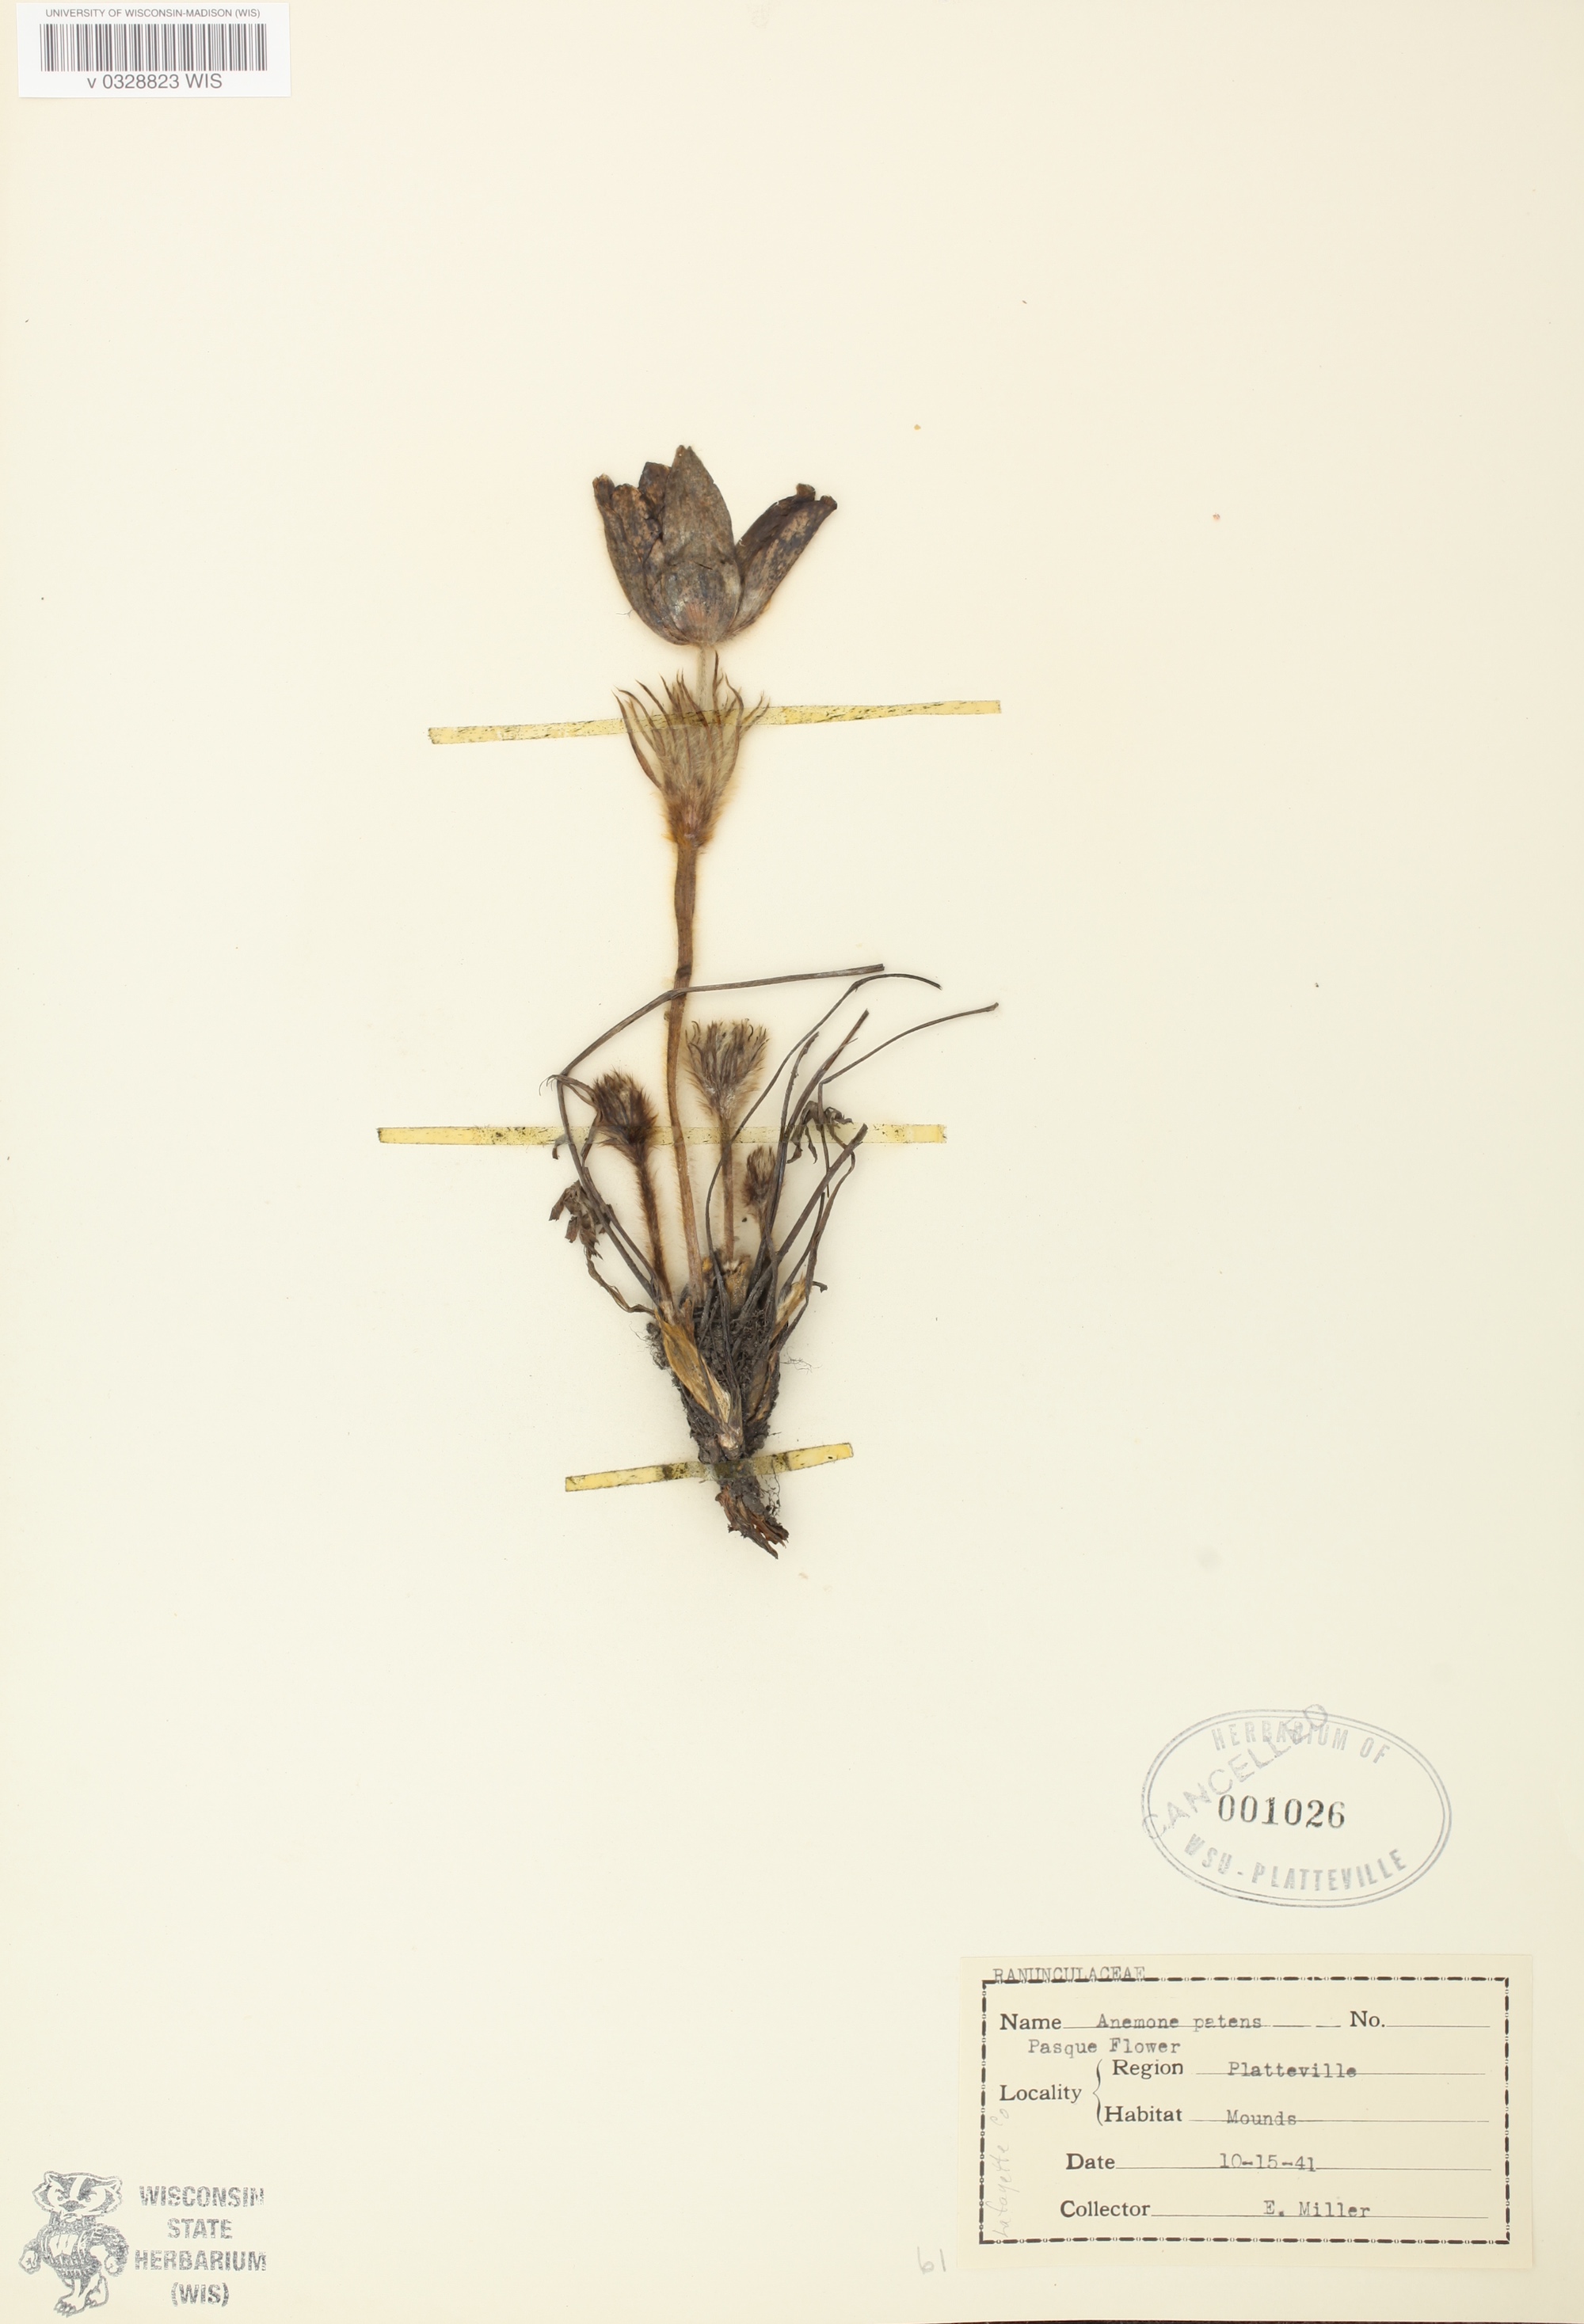 Pasque flower specimen collected on October 15, 1941 at Platte Mounds near Platteville, Wisconsin.